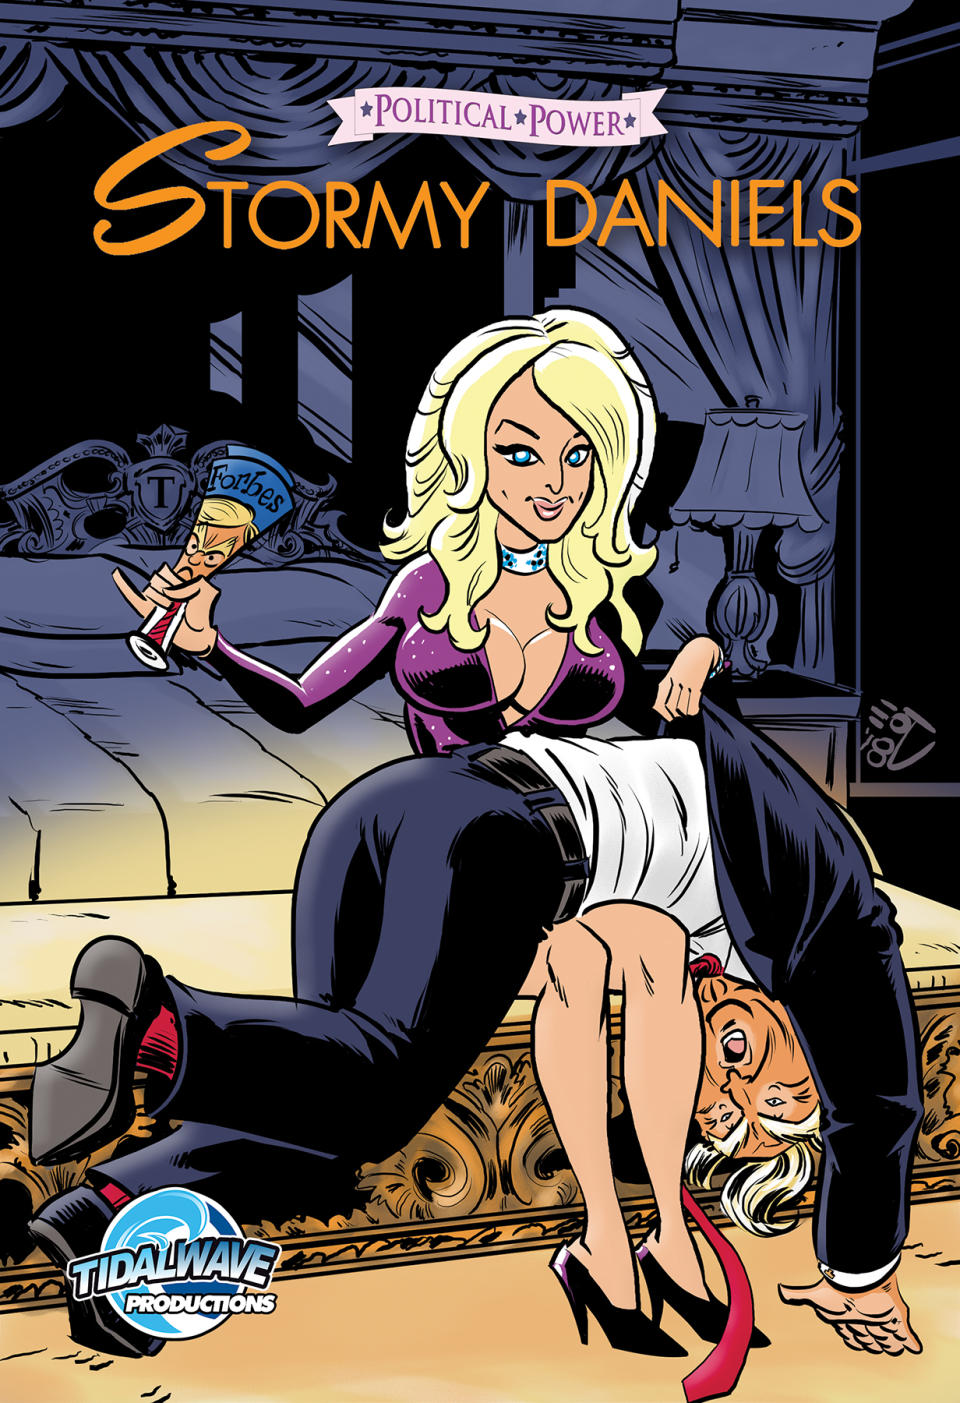 Husband Wife Spanking Artwork - New comic shows Stormy Daniels spanking President Trump